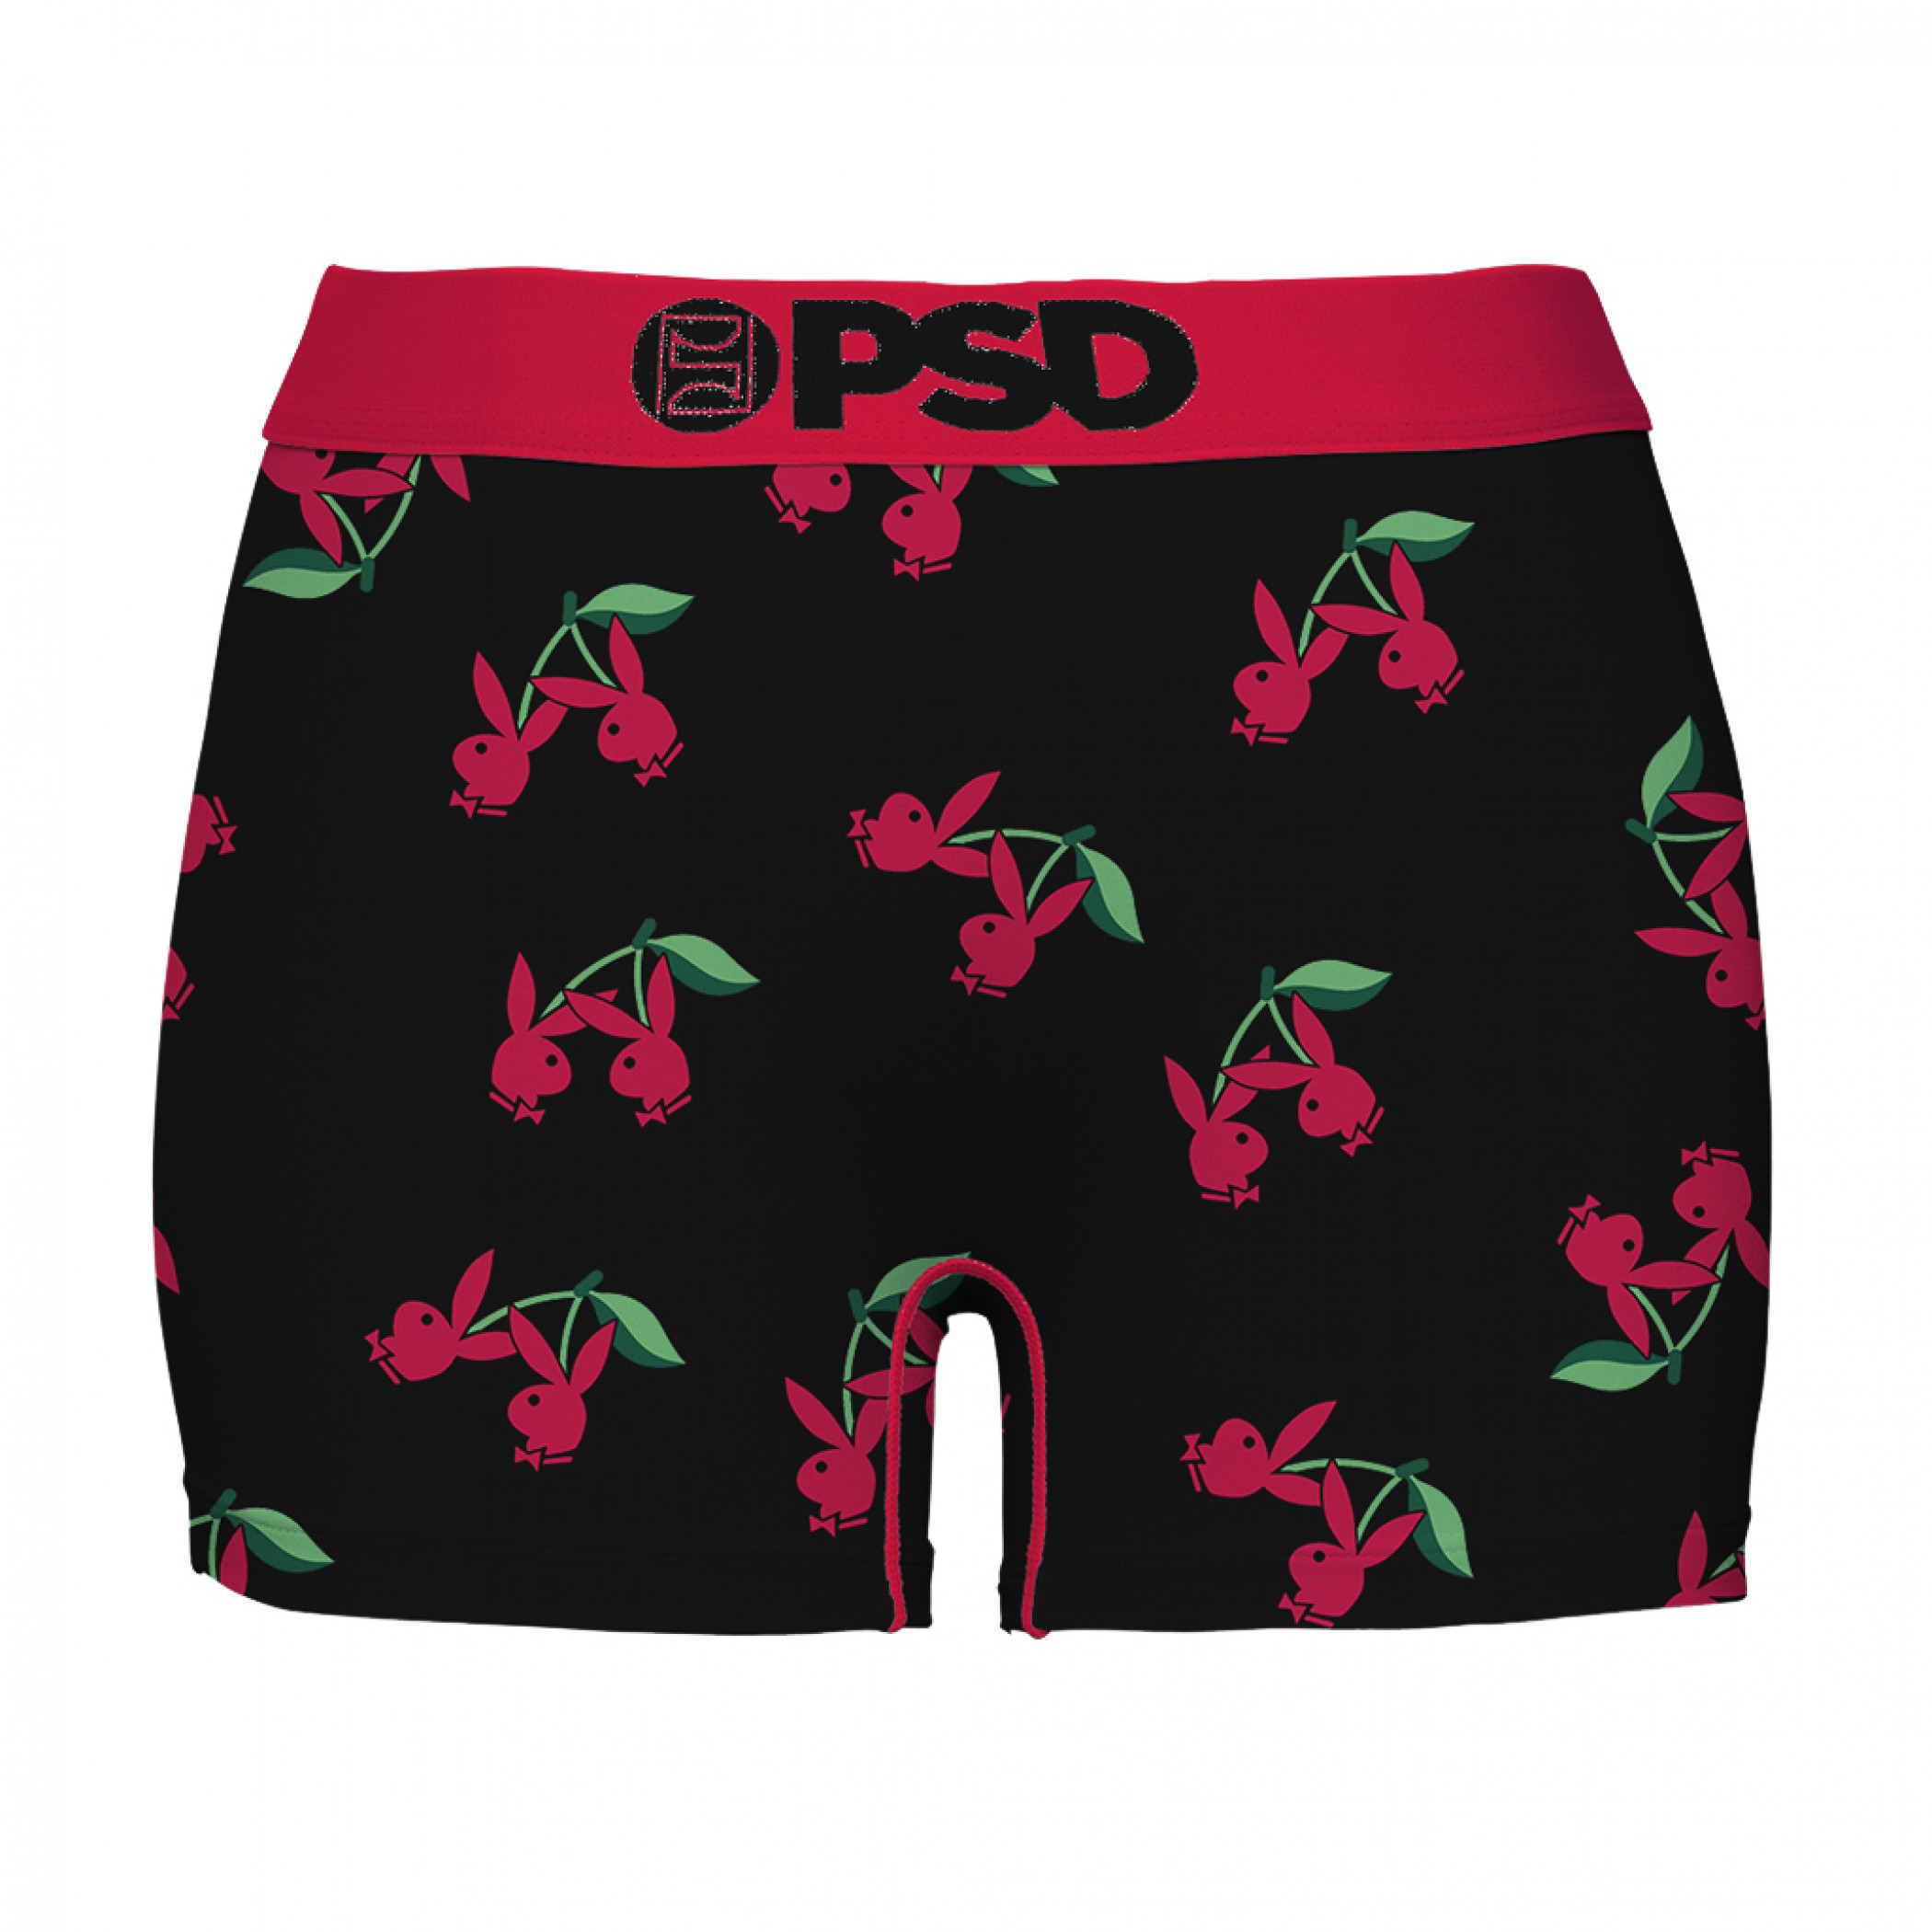 Bunny Mascot Microfiber Blend Womens PSD Boy Shorts Underwear